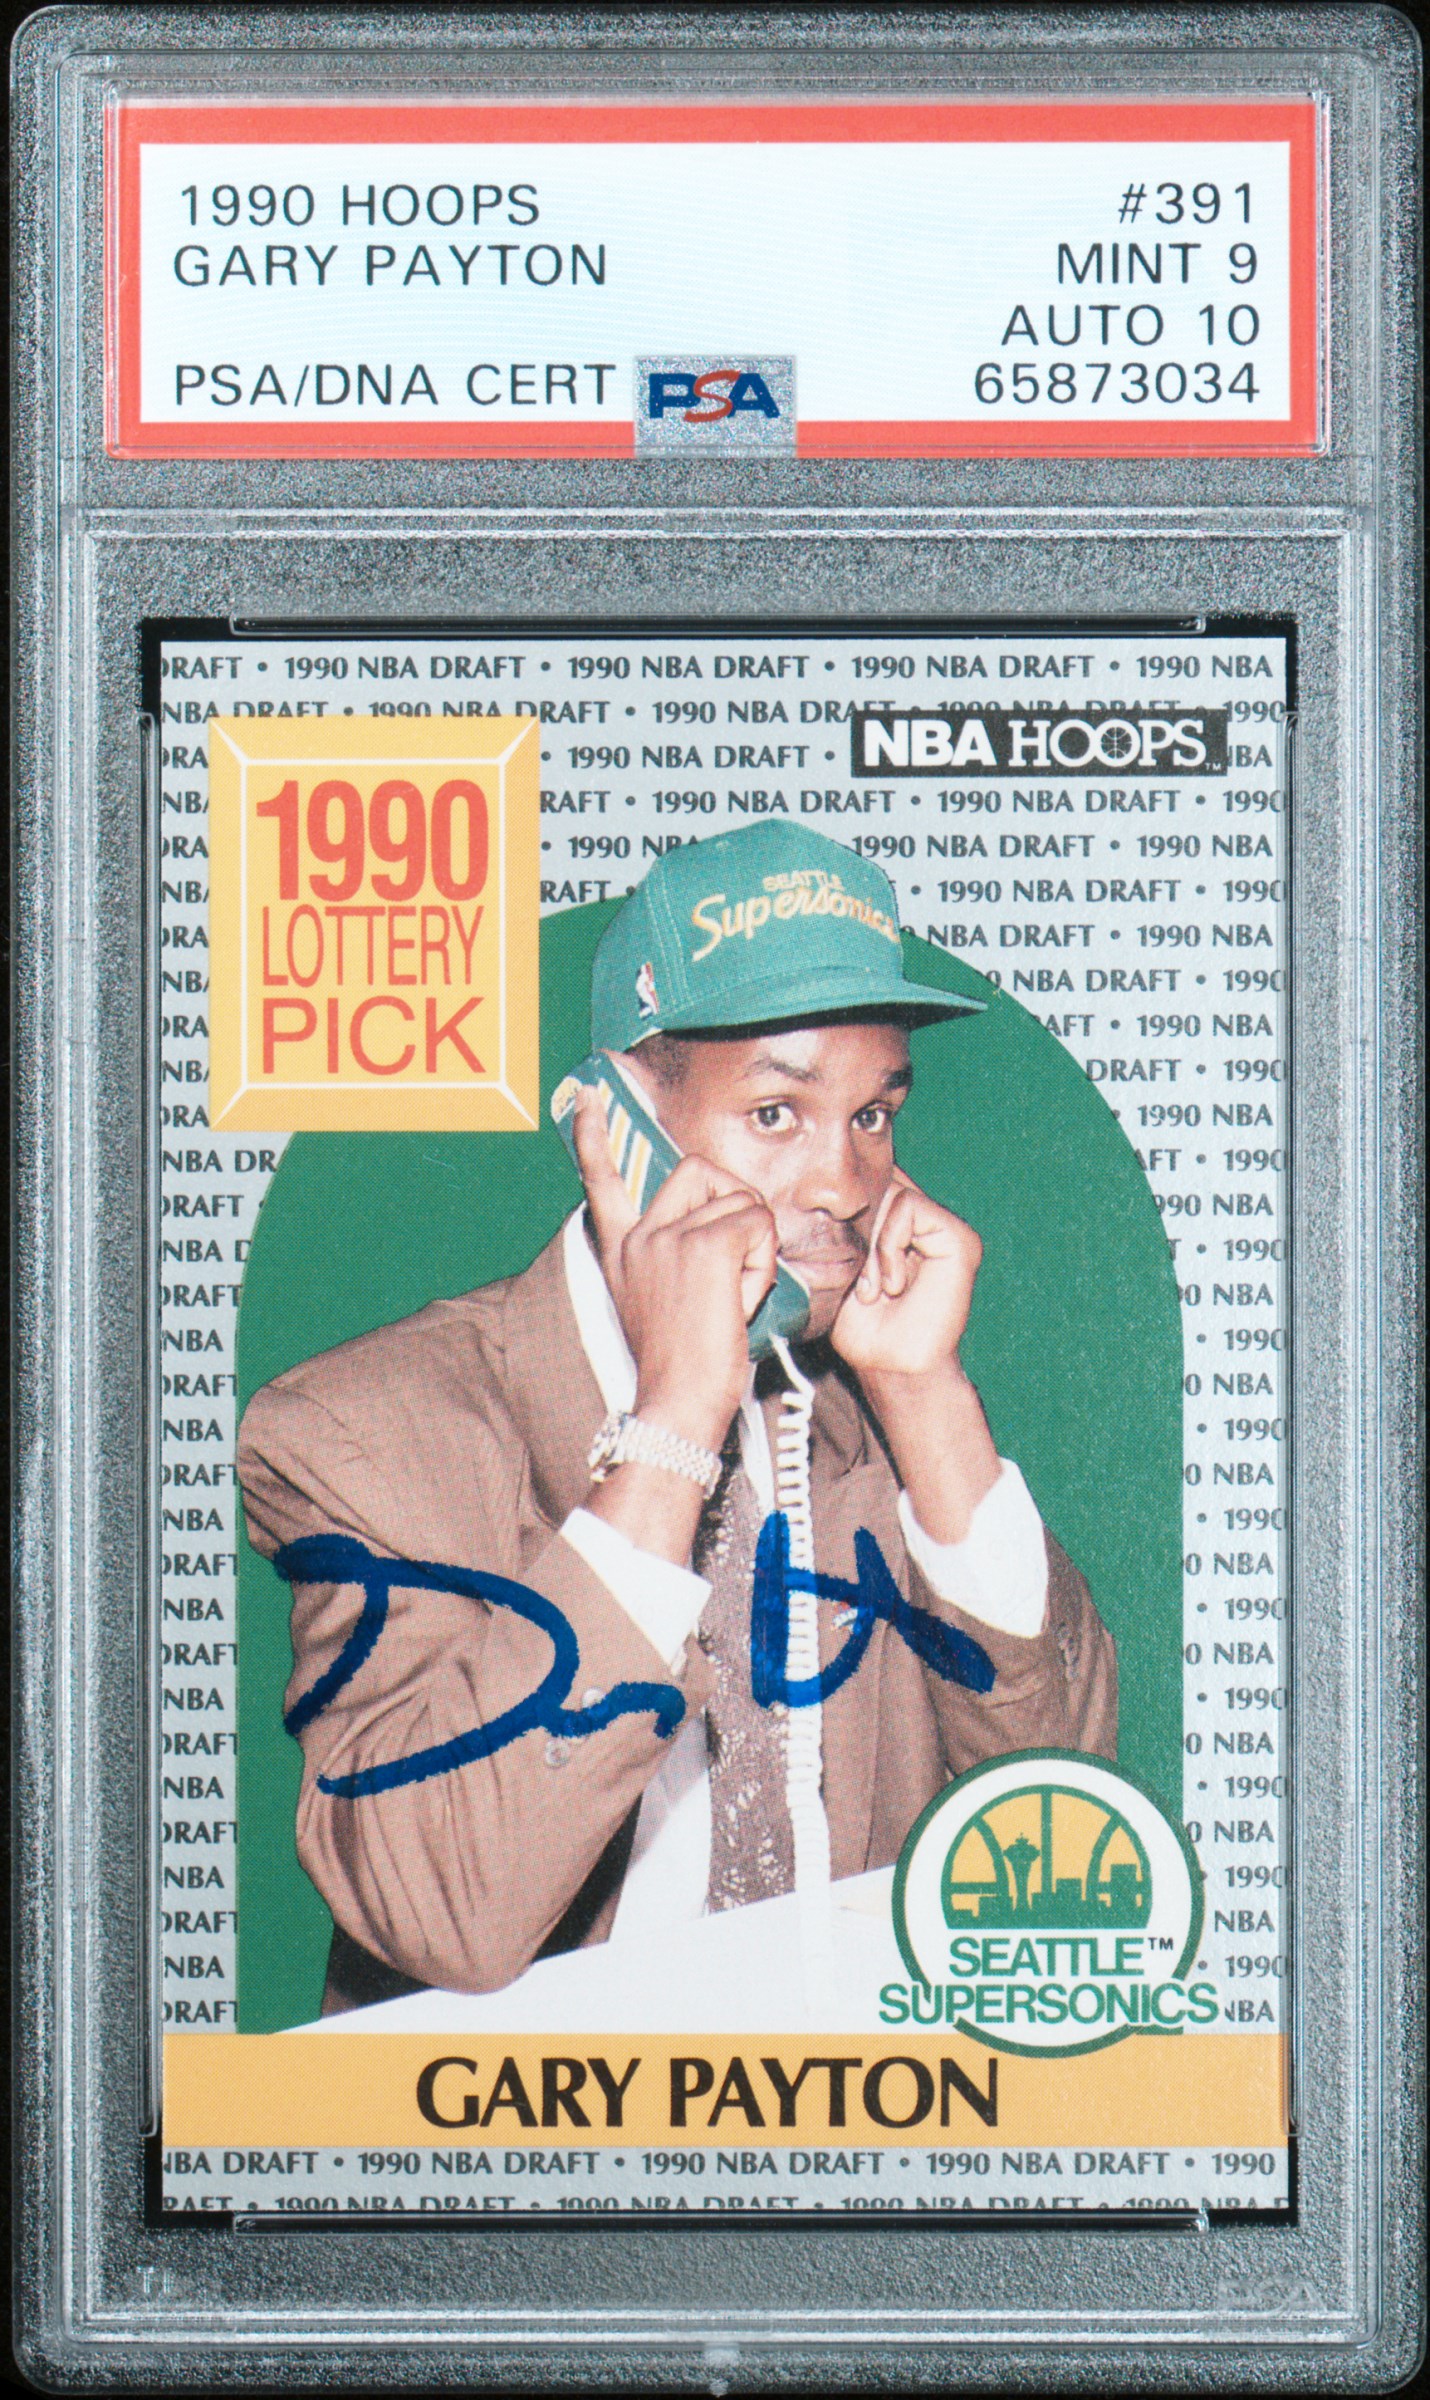 Gary Payton 1990 Hoops Signed Basketball Rookie Card #391 Auto PSA 10 65873034